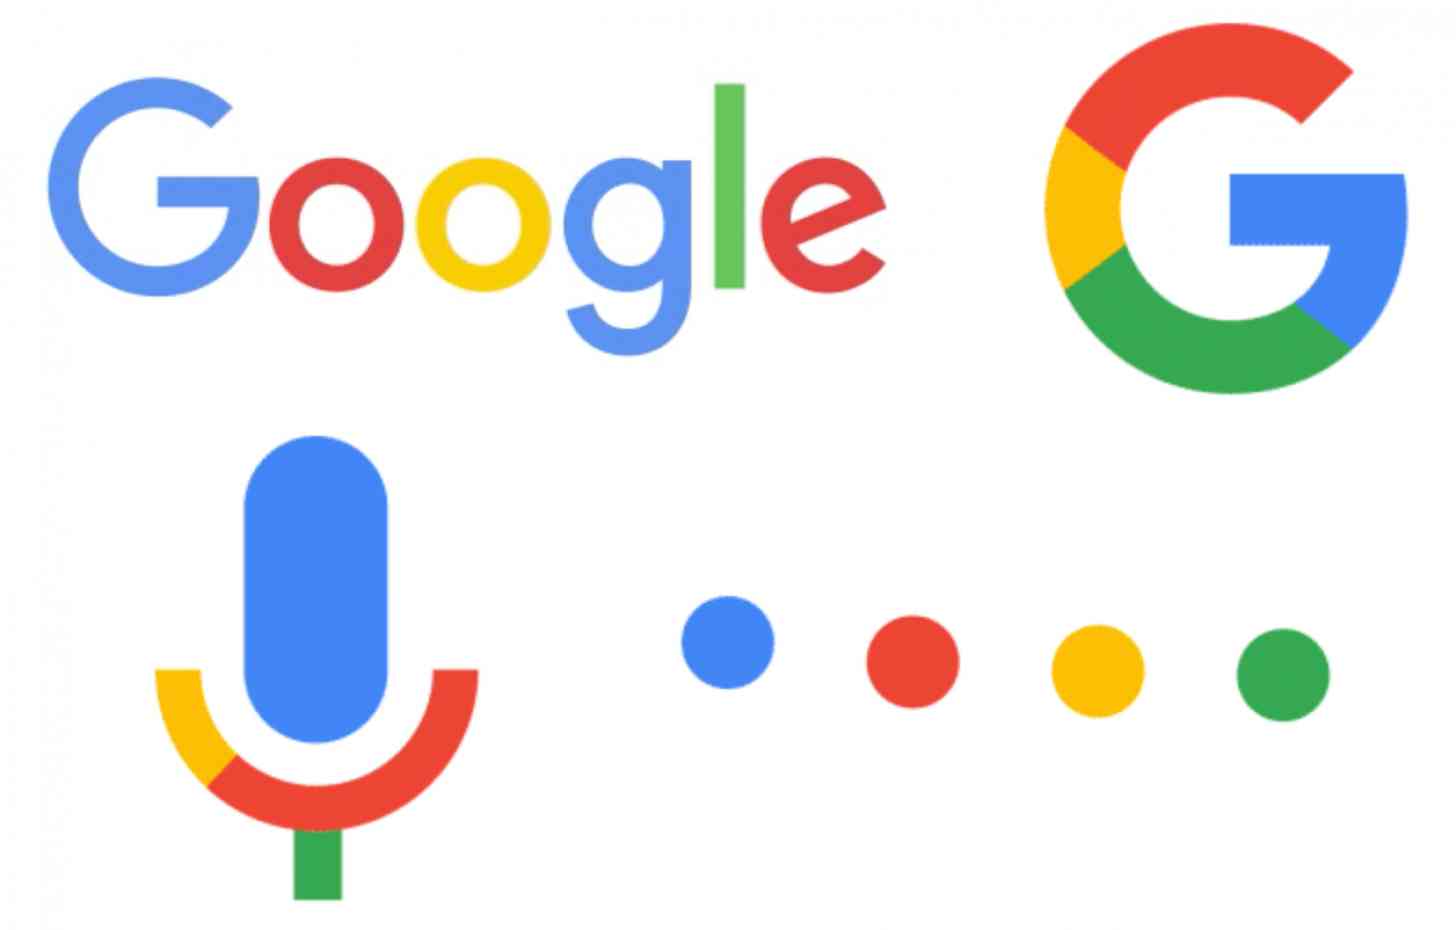 New Google Logo - Google unveils new logo